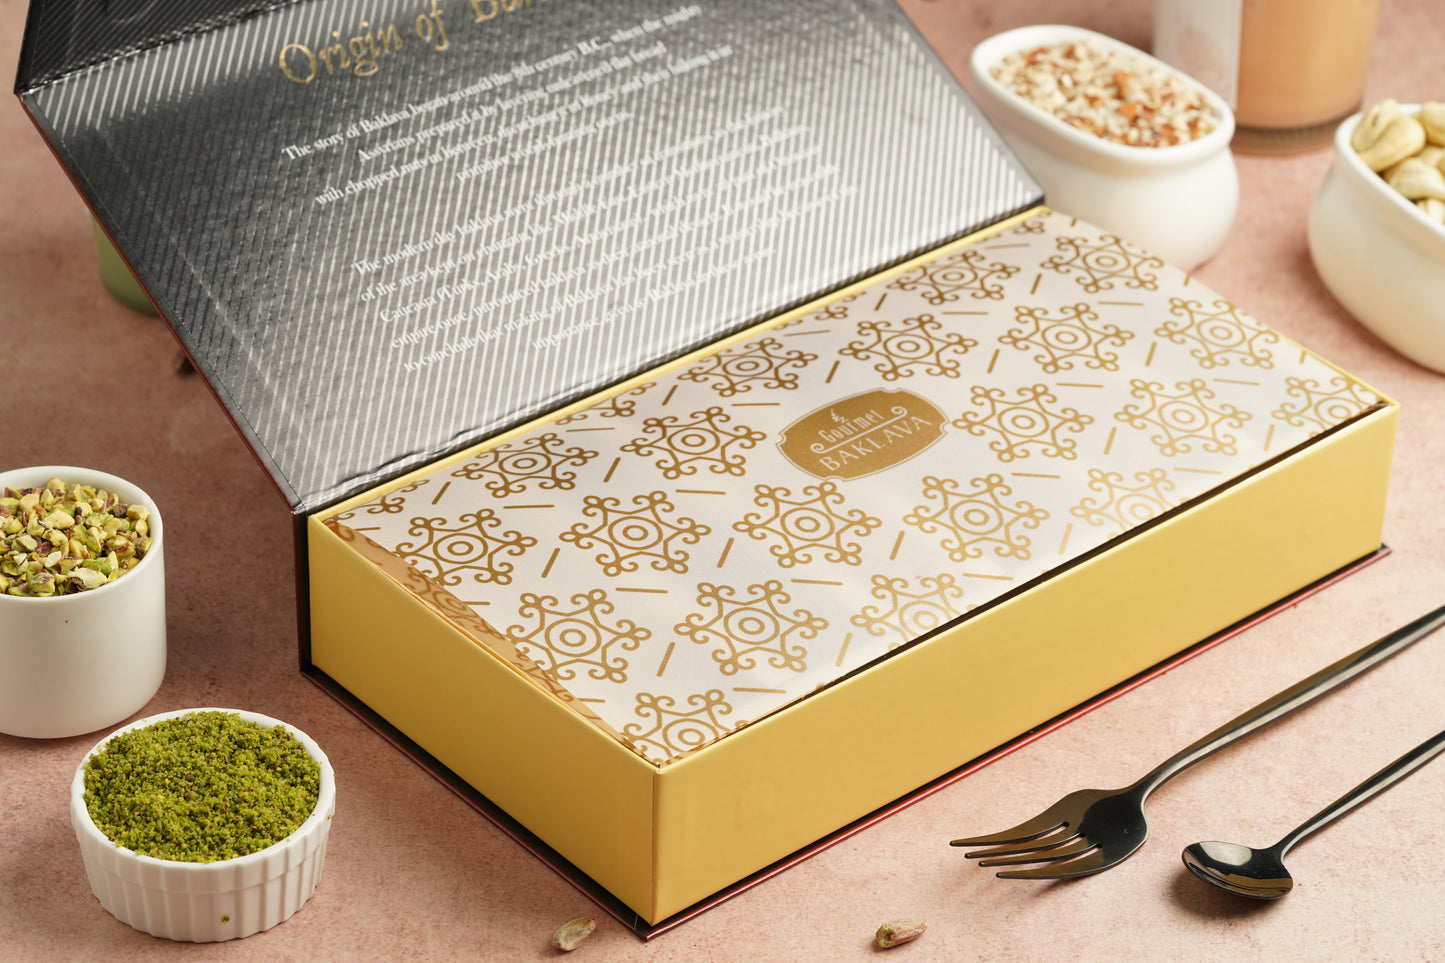 Gourmet Crescent Gift Box of Chocolate Cashew Pistachio Baklava